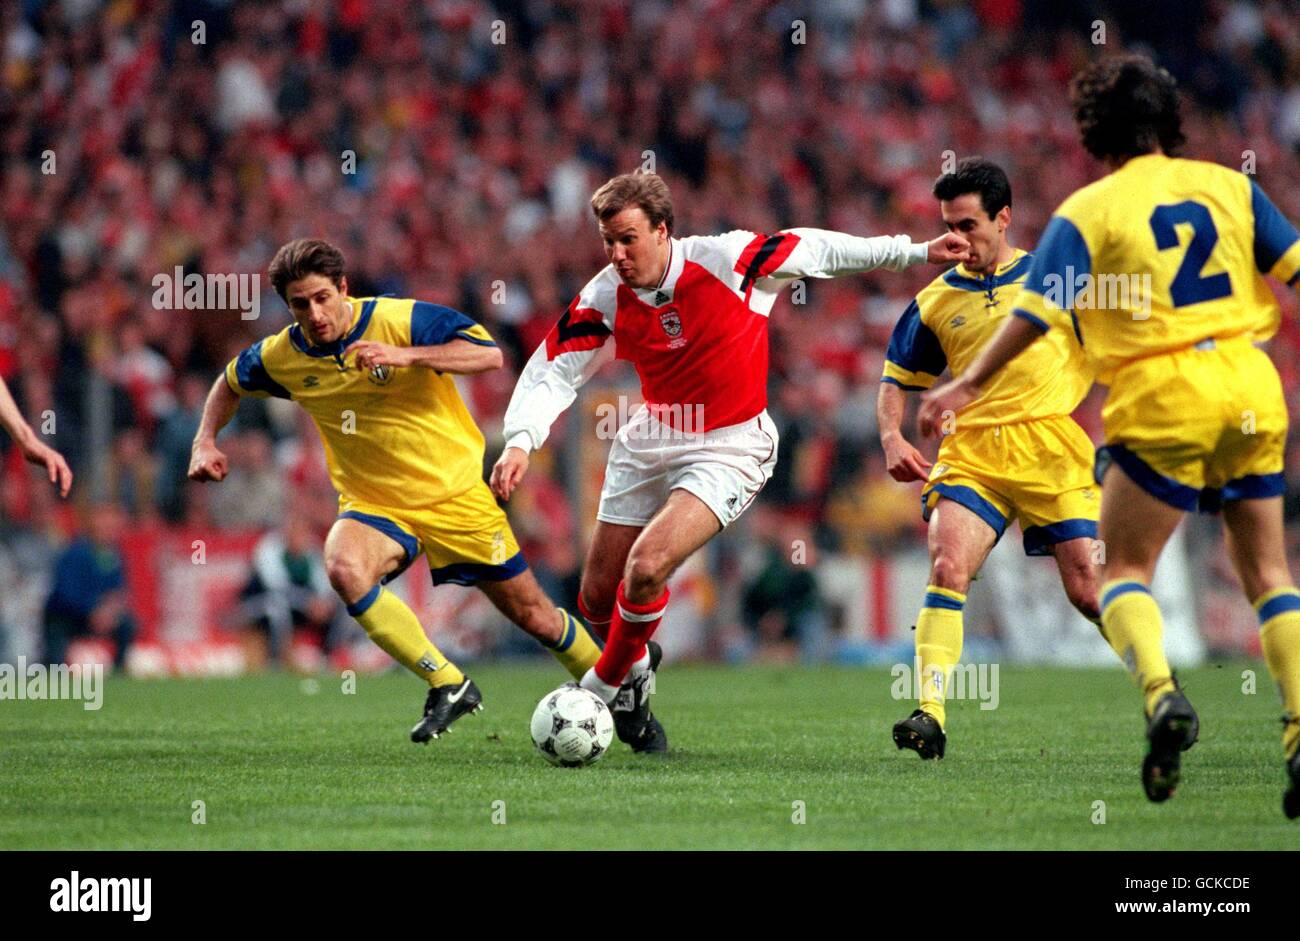 Arsenal v Manchester United      26-11-1994 